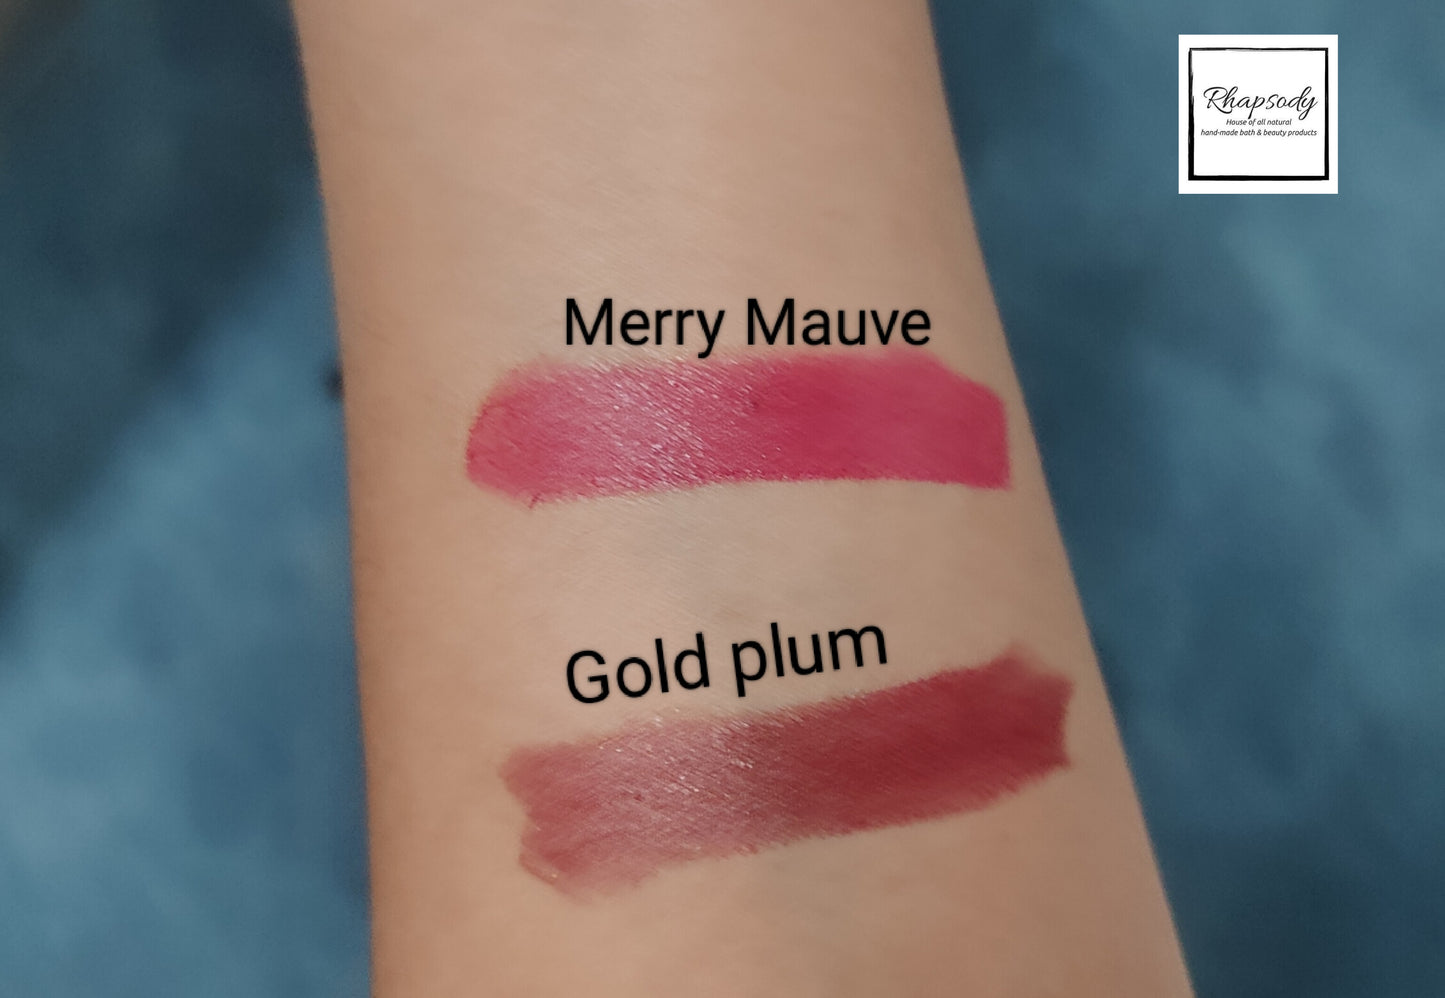 Merry Mauve lipstick